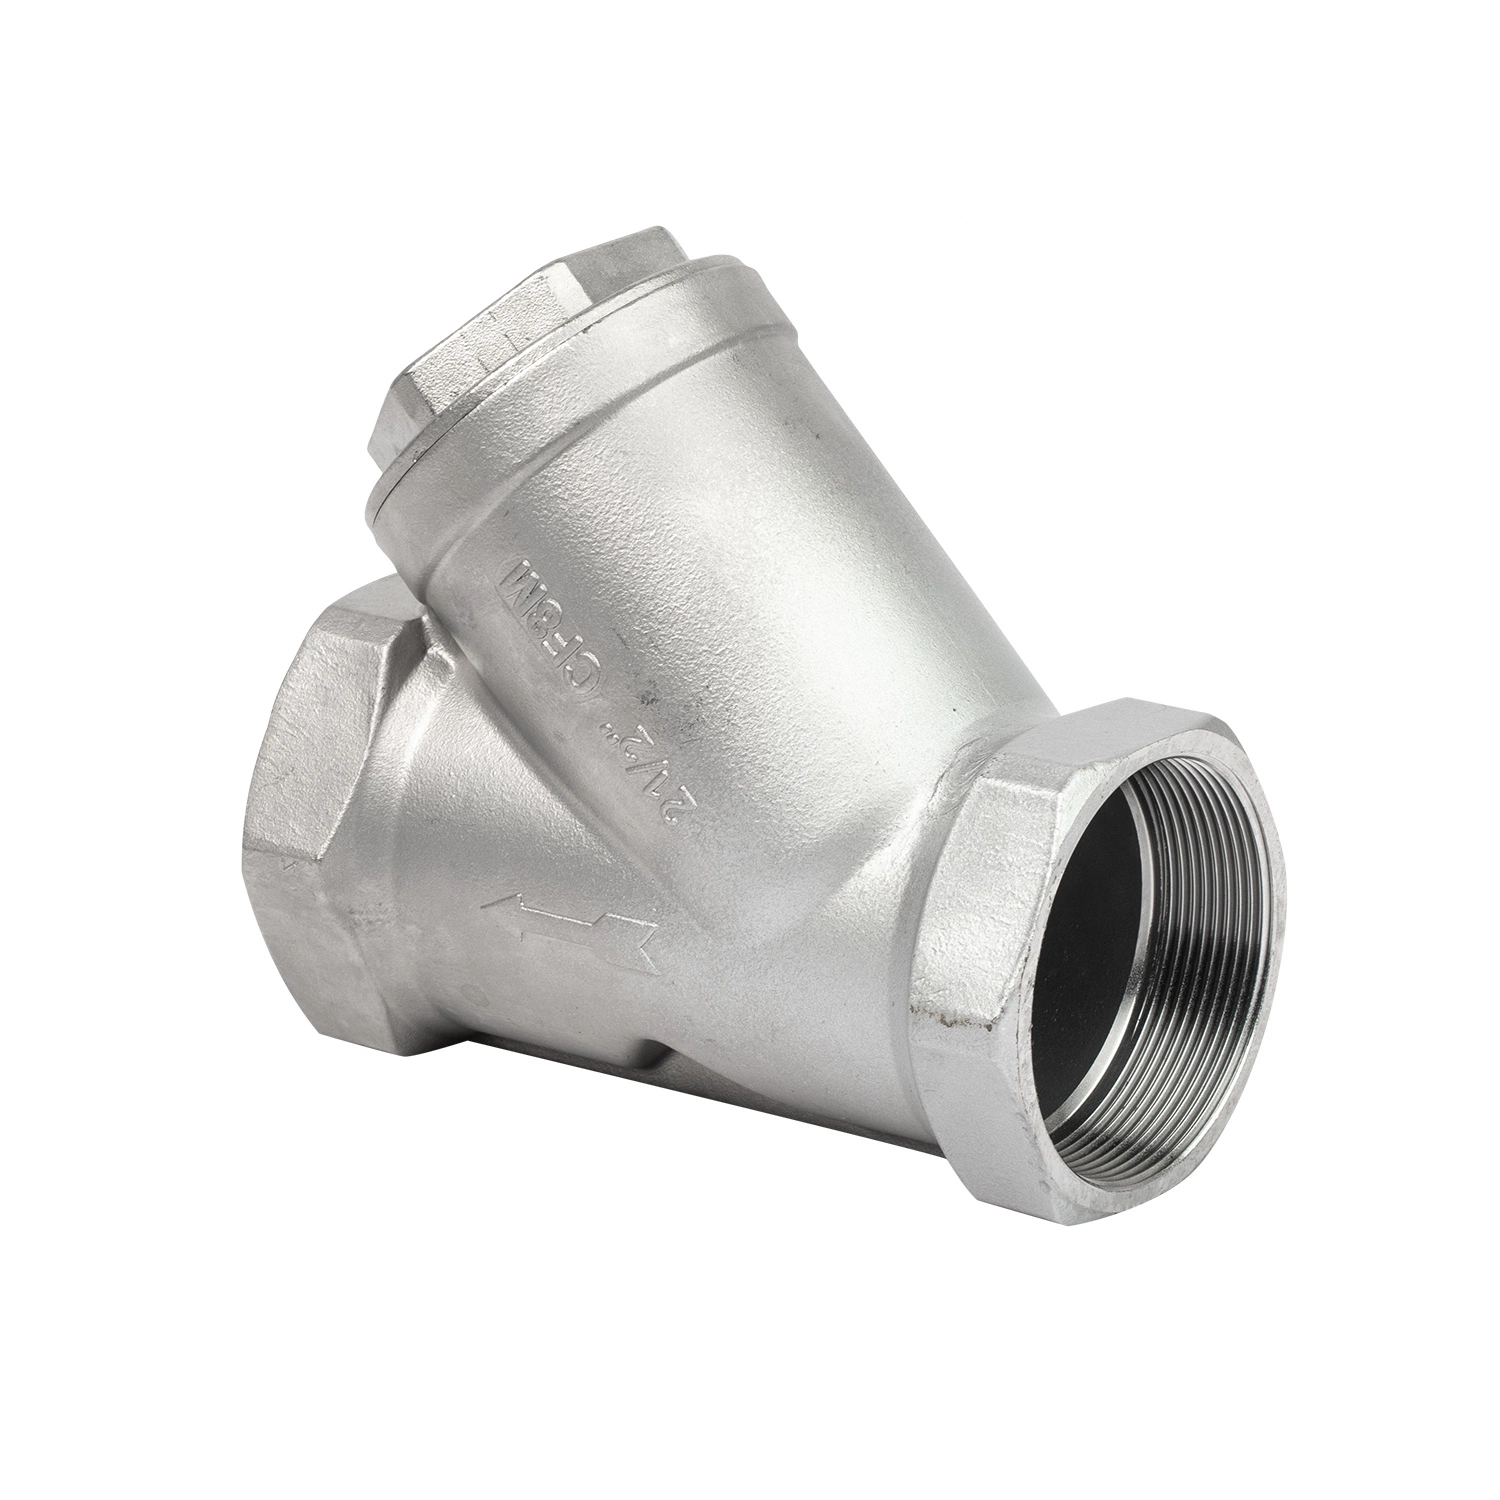 1/2"-3" de aço inoxidável Peneira Y agregado rosqueado filtros para válvulas industriais e os canos de água